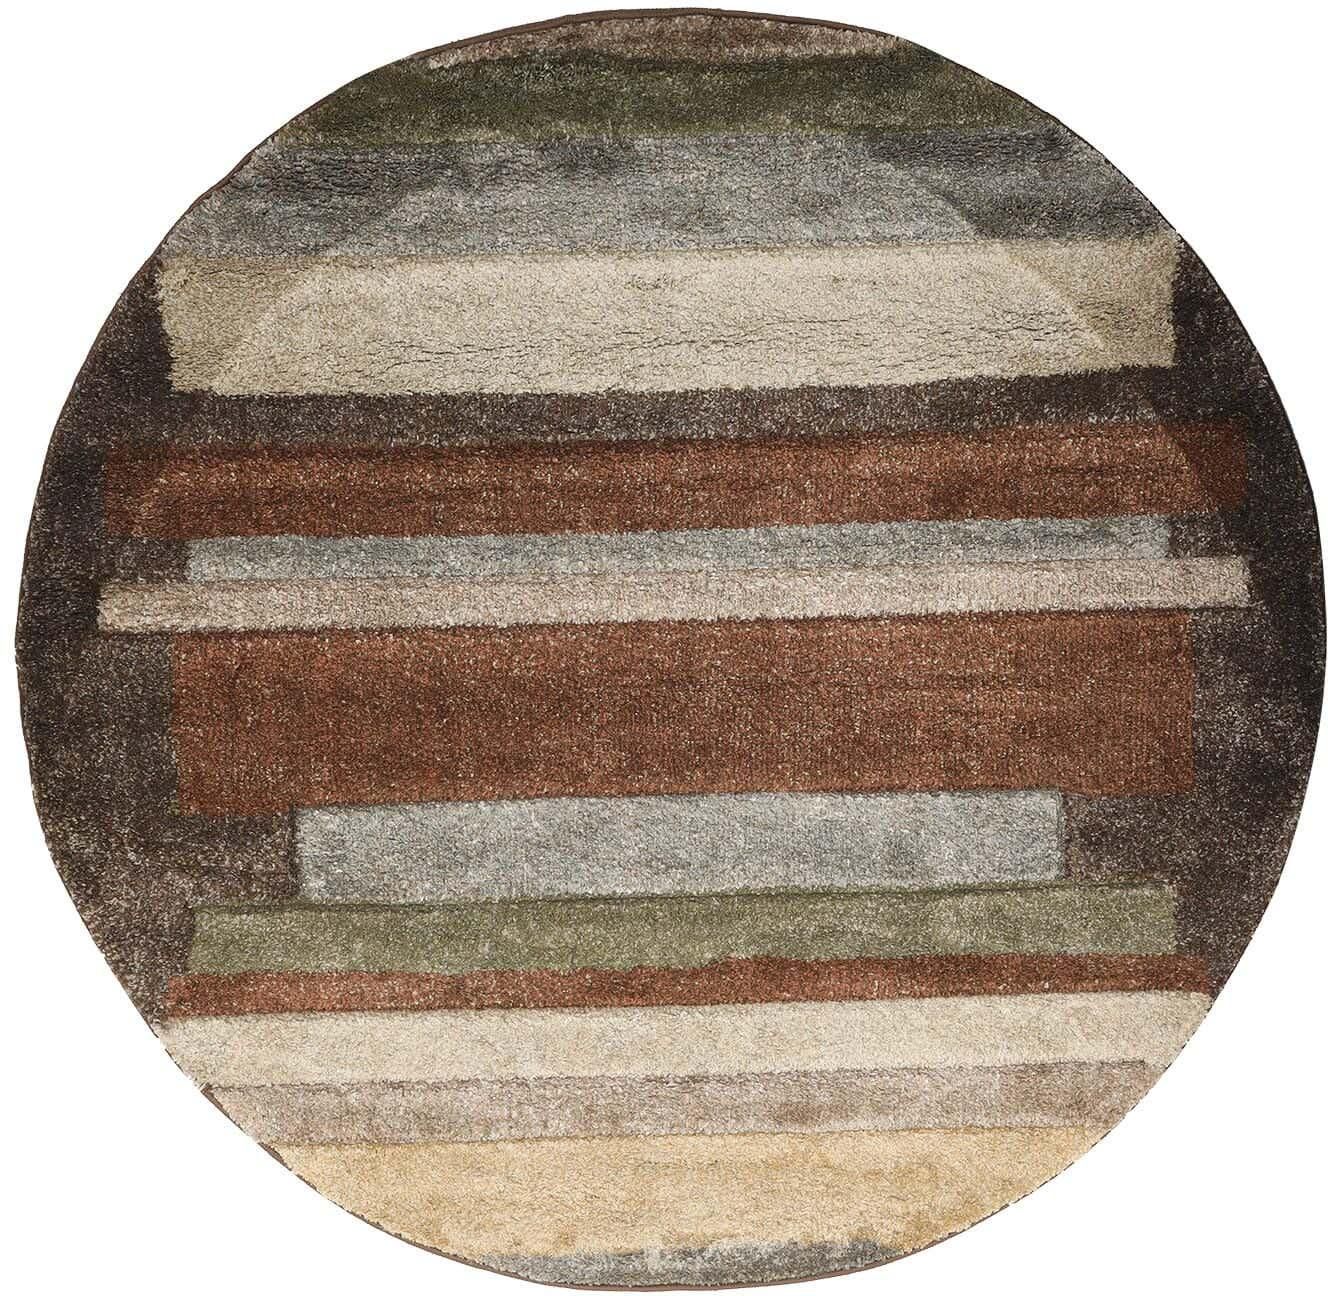 Get Oriental Weavers Carmona Polypropylene Round Carpet, 150x150 cm - Brown Beige with best offers | Raneen.com